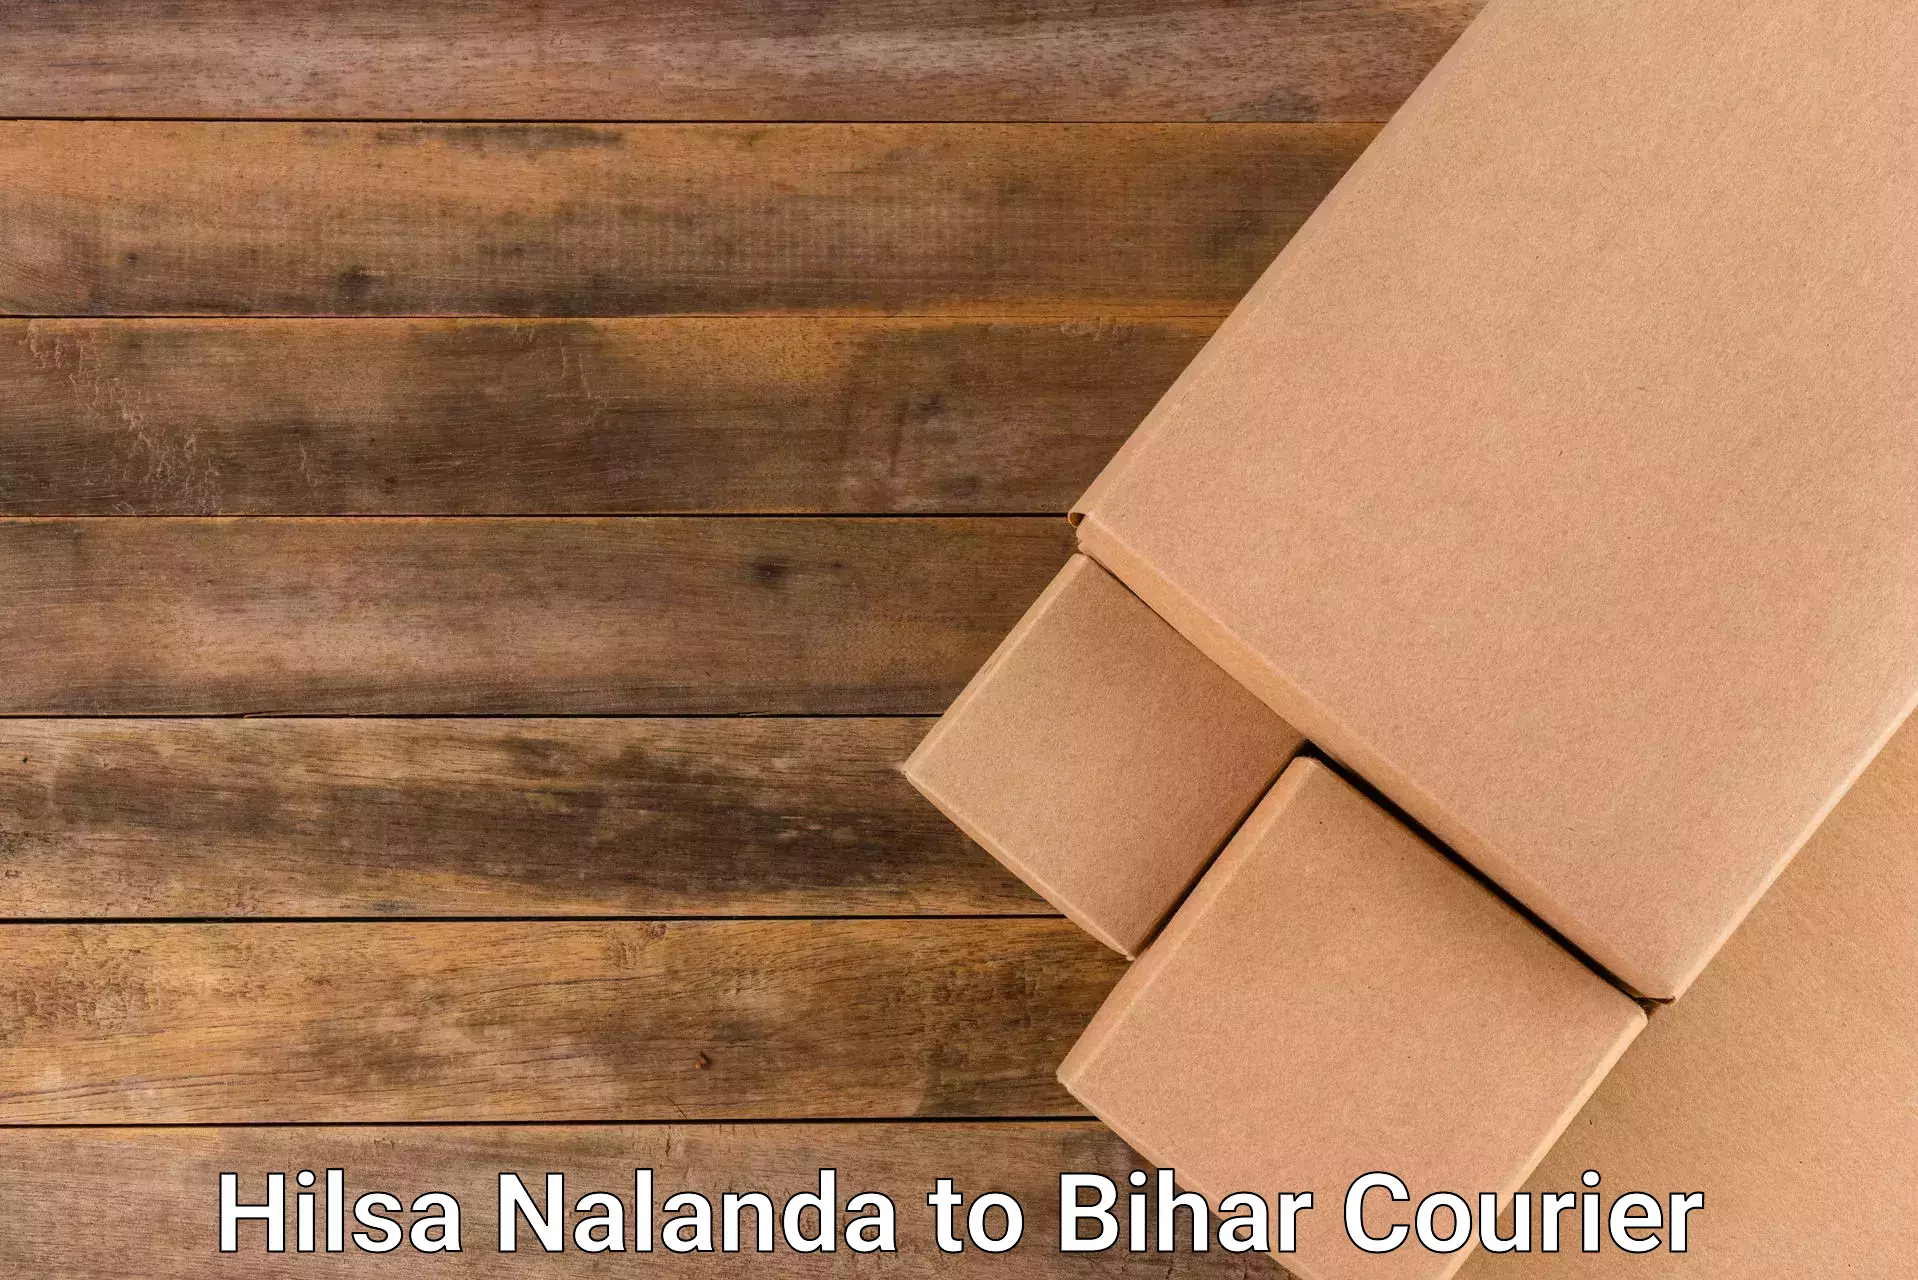 State-of-the-art courier technology Hilsa Nalanda to Bhorey